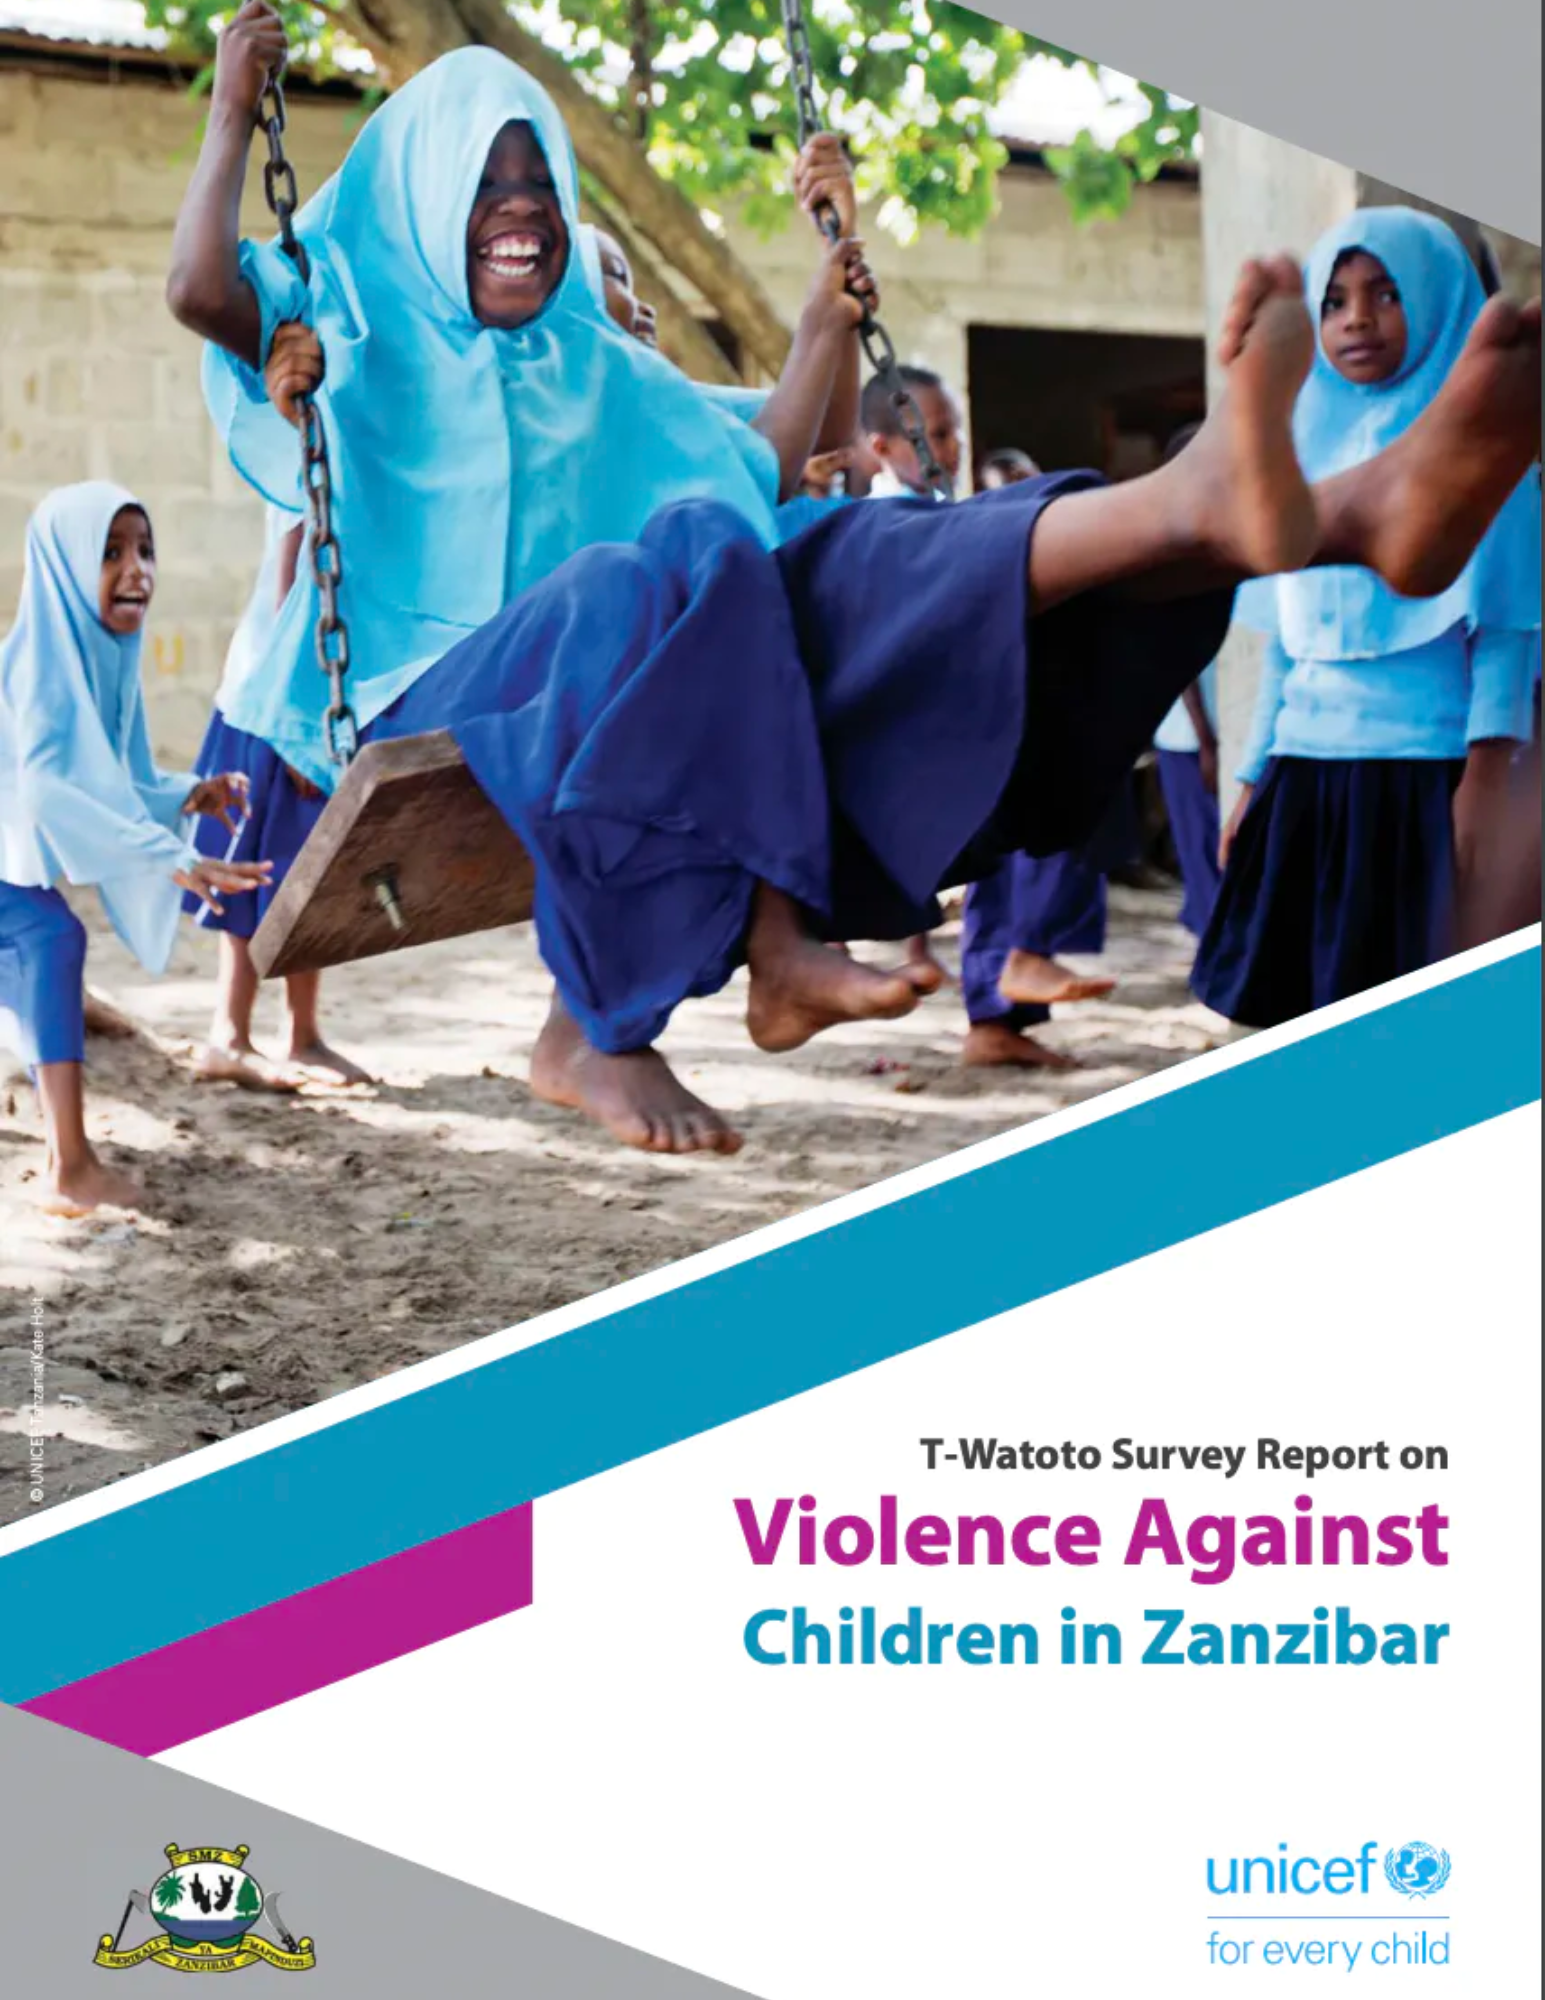 T-Watoto survey report on Violence Against Children in Zanzibar